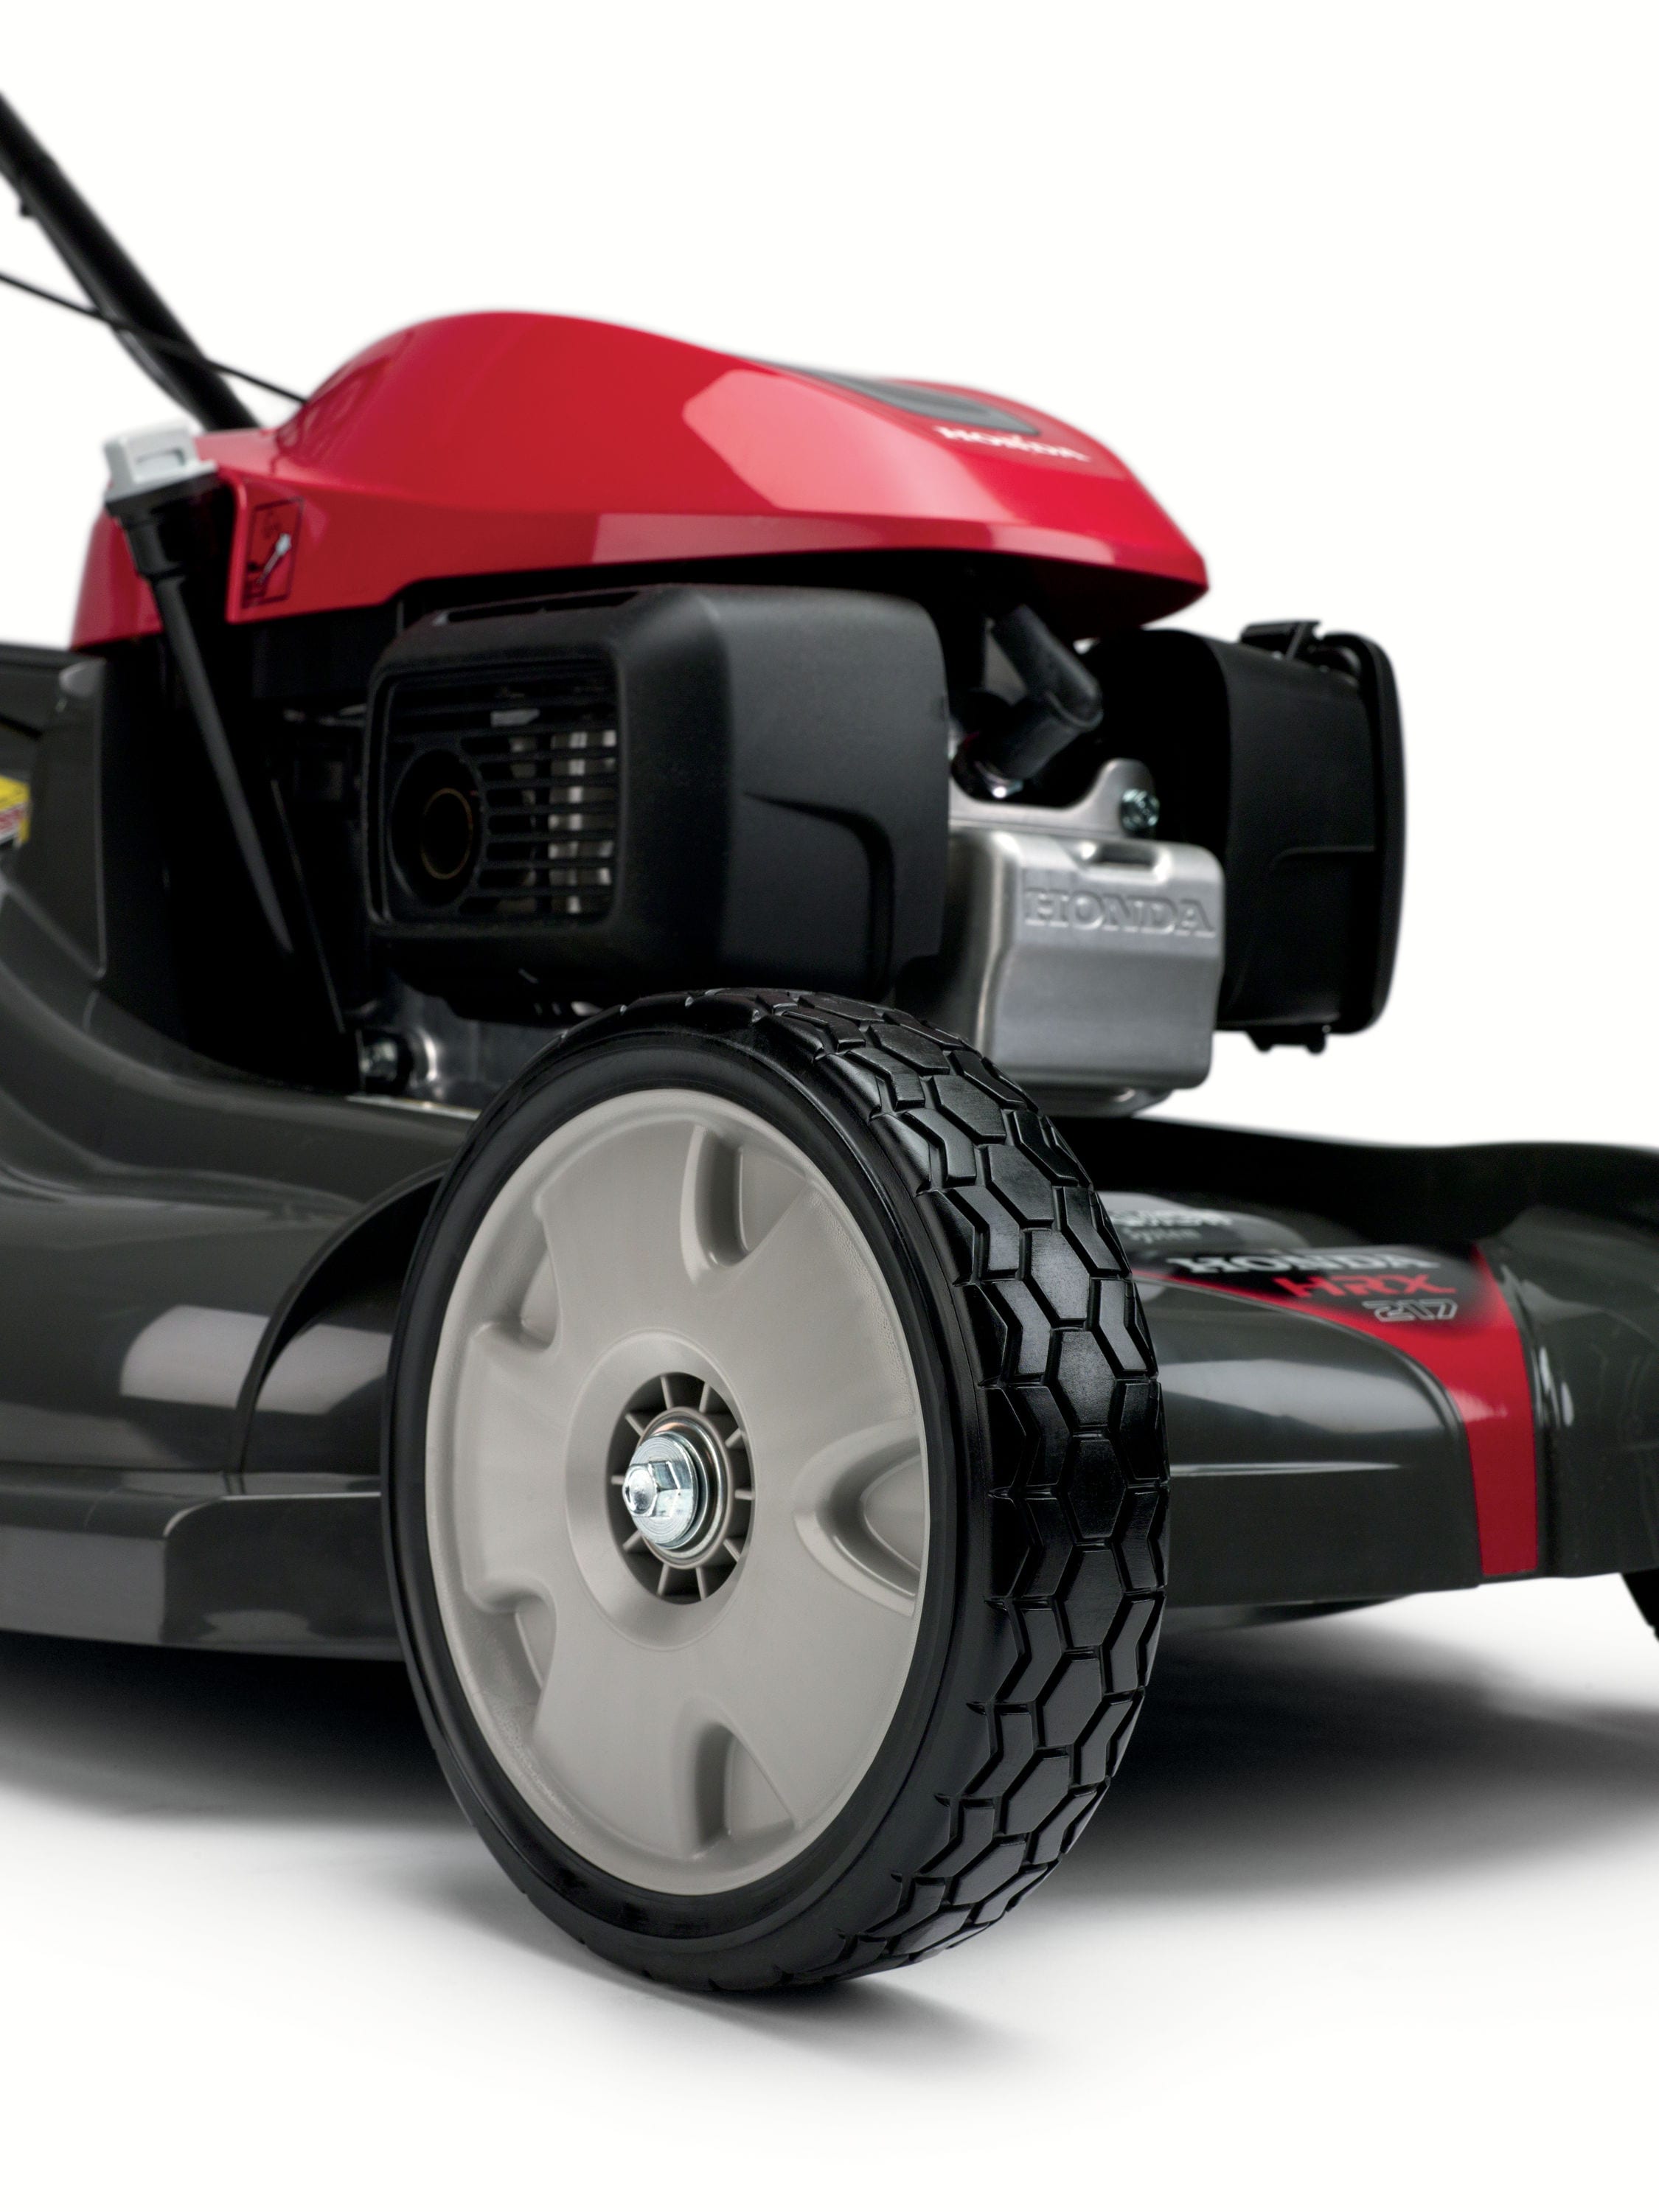 Honda Hrx 201-cc 21-in Gas Self-propelled Lawn Mower Engine at